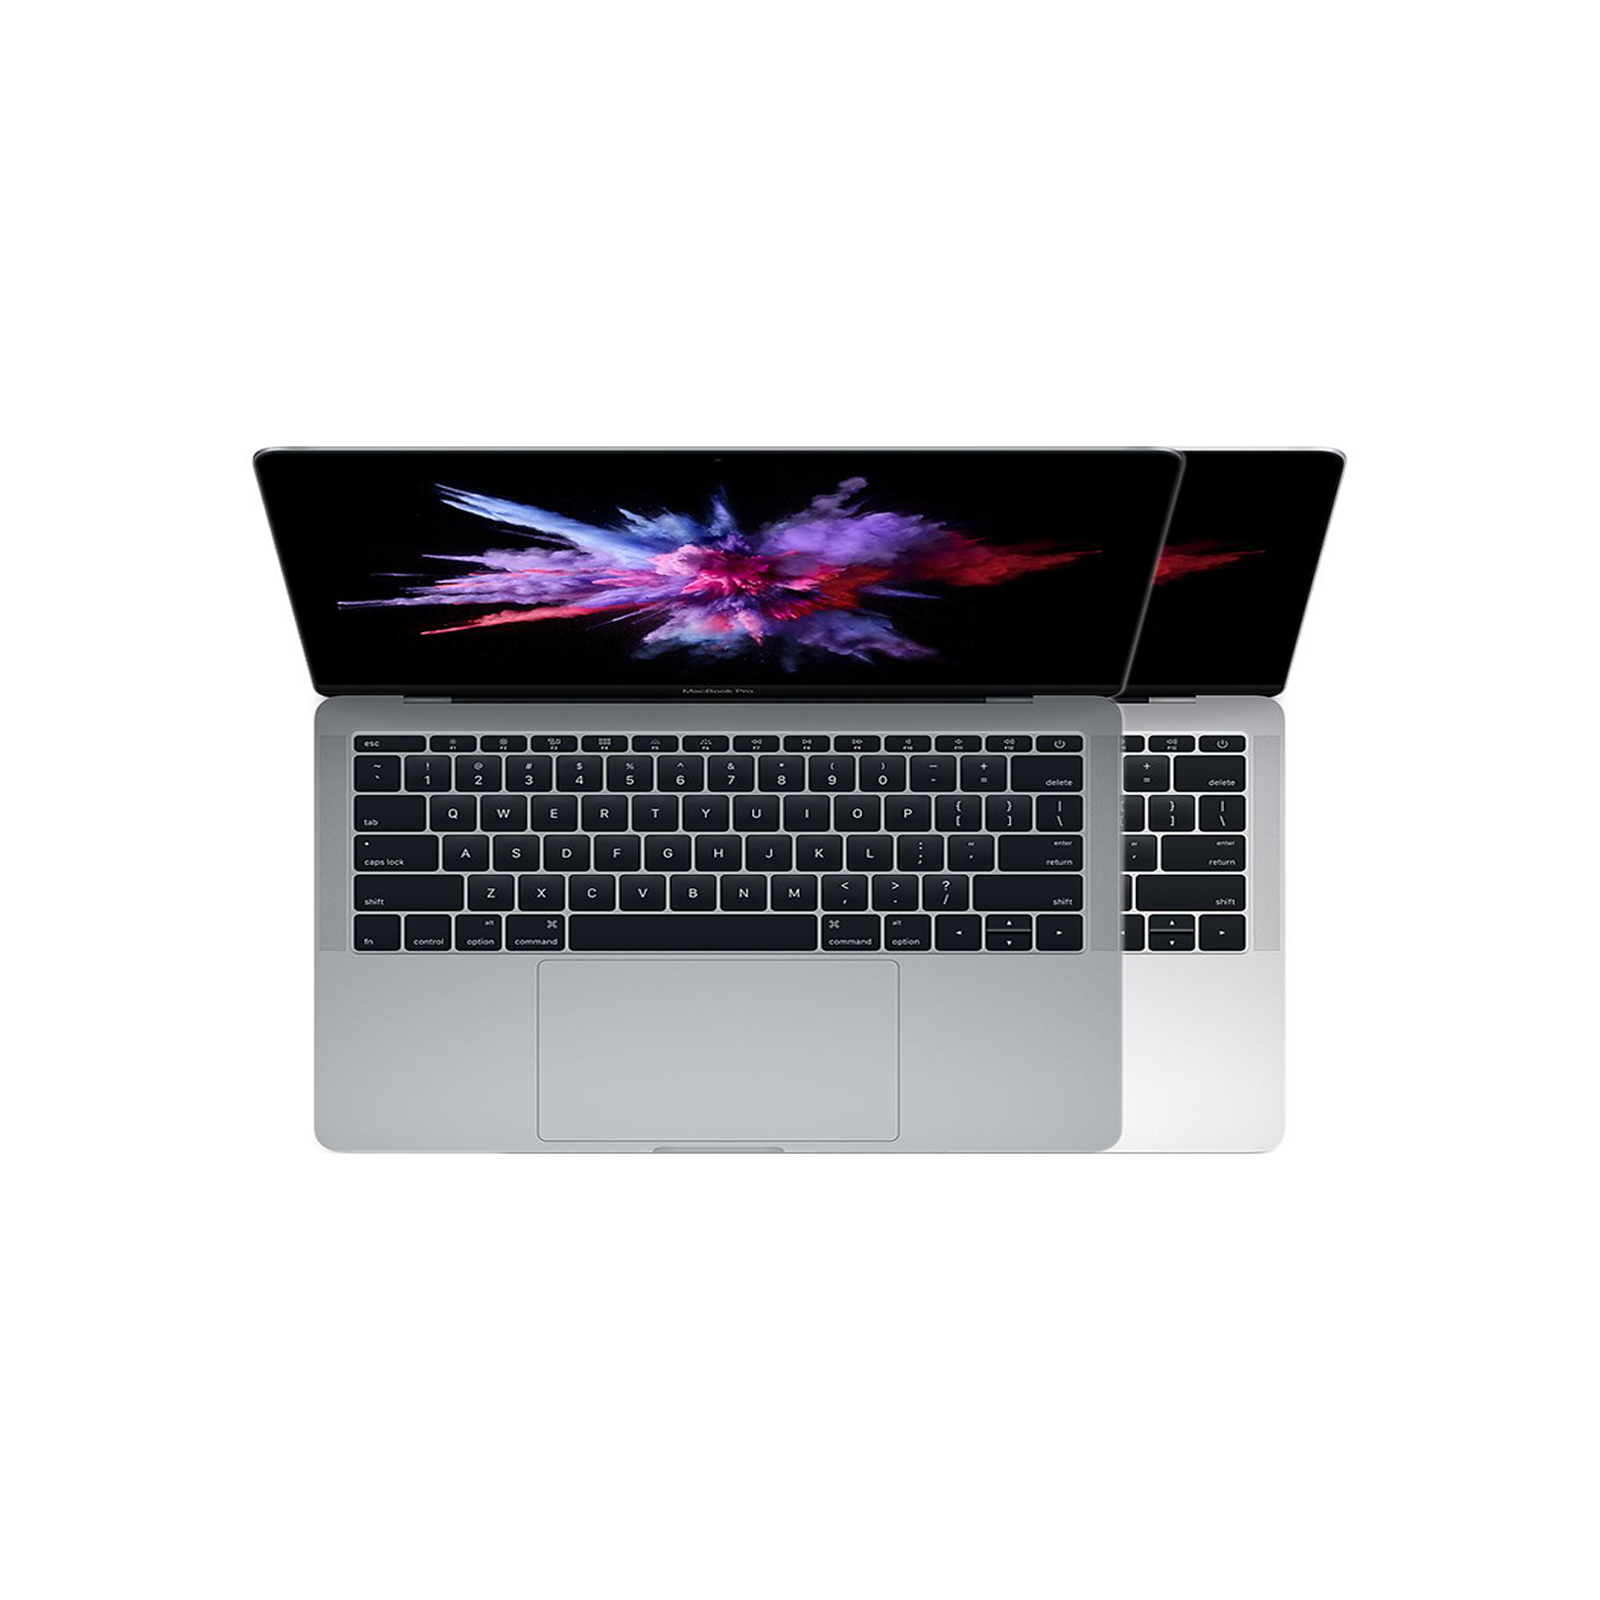 MacBook Pro (13-inch, 2017, Four Thunderbolt 3 Ports) Intel Core 